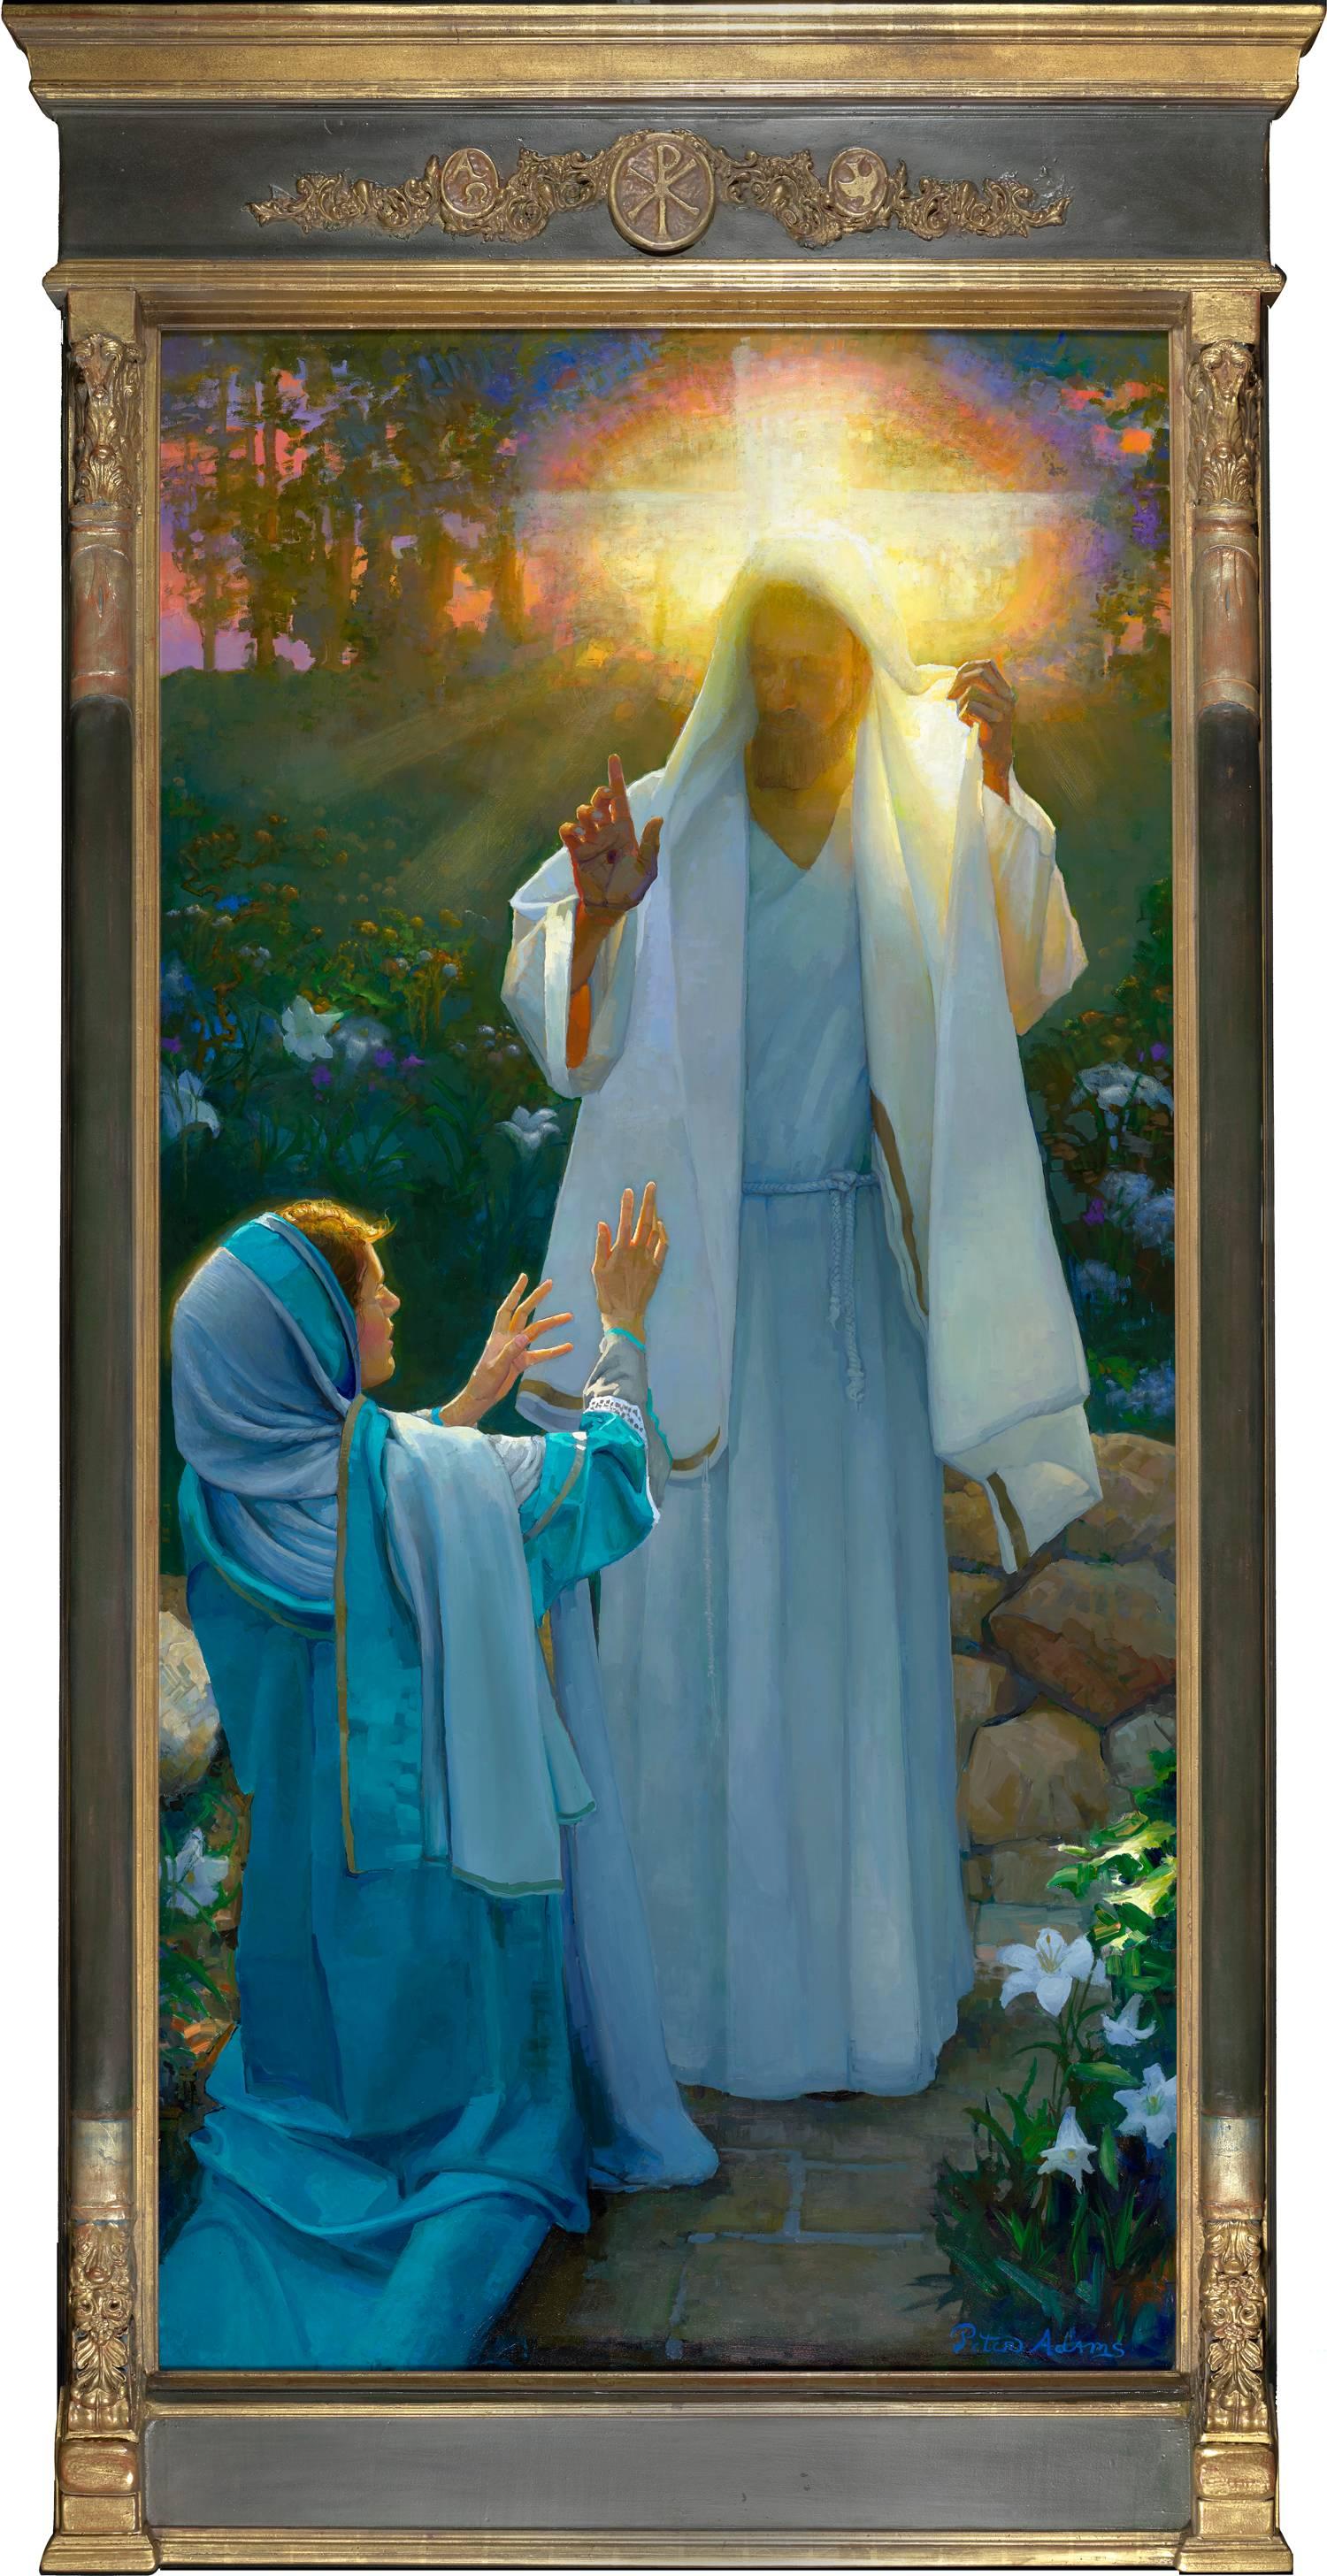 Peter Adams Figurative Painting - The Resurrection